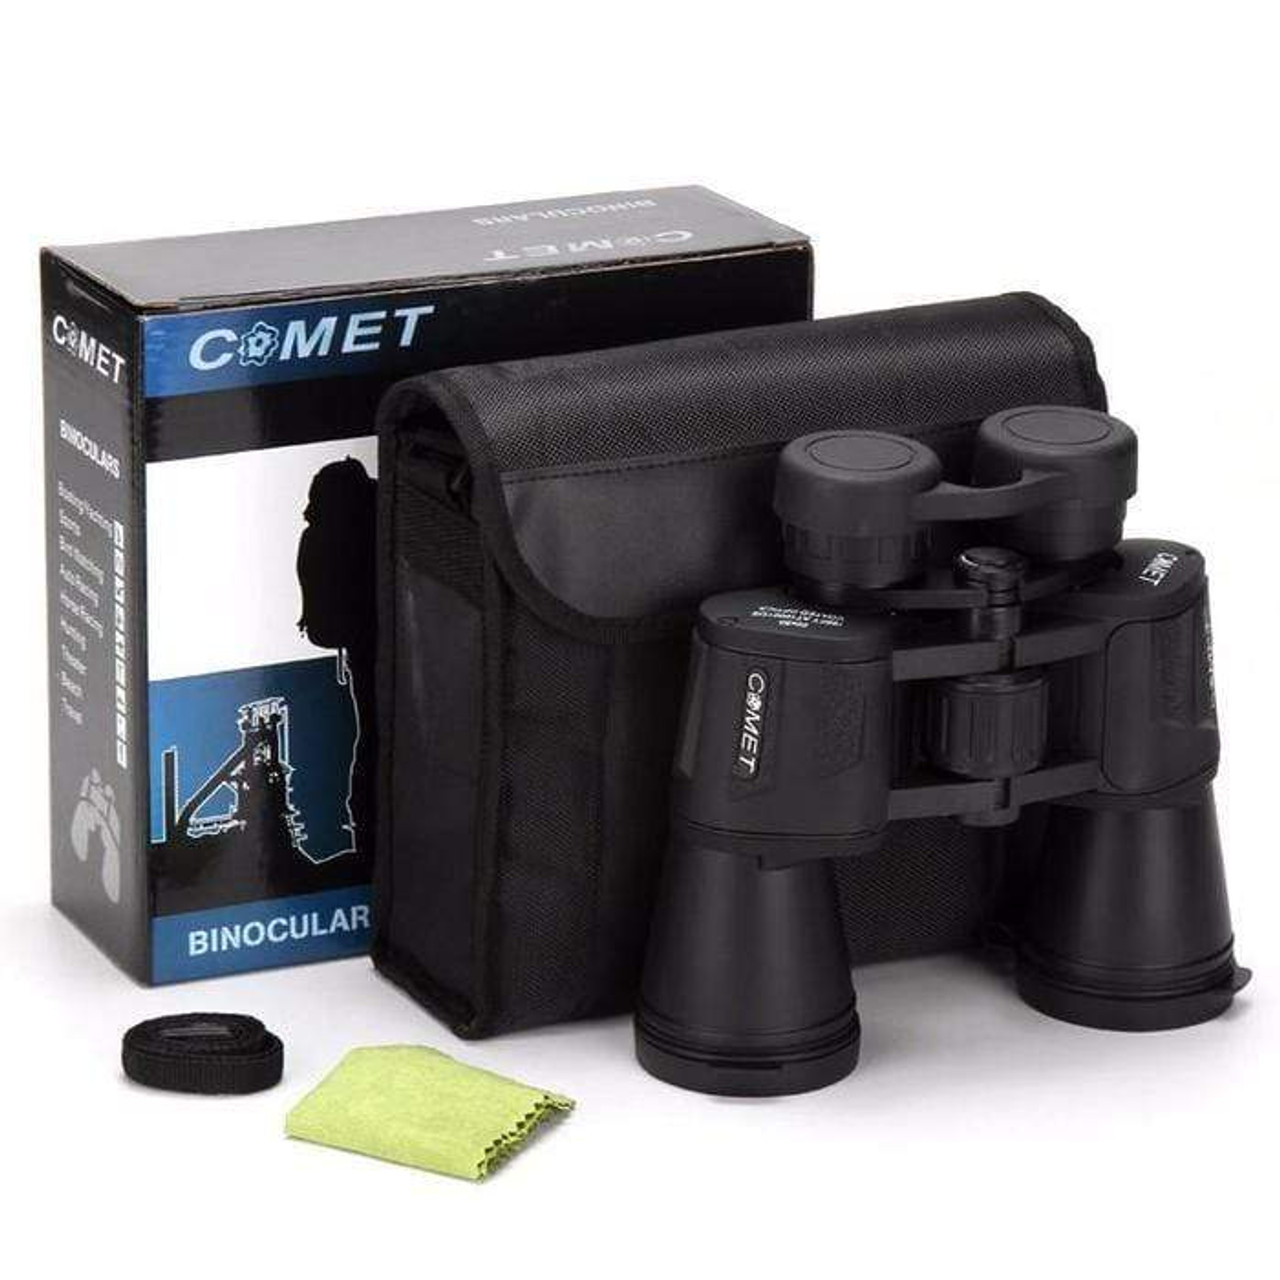 comet-binoculars-snatcher-online-shopping-south-africa-17782954328223.jpg